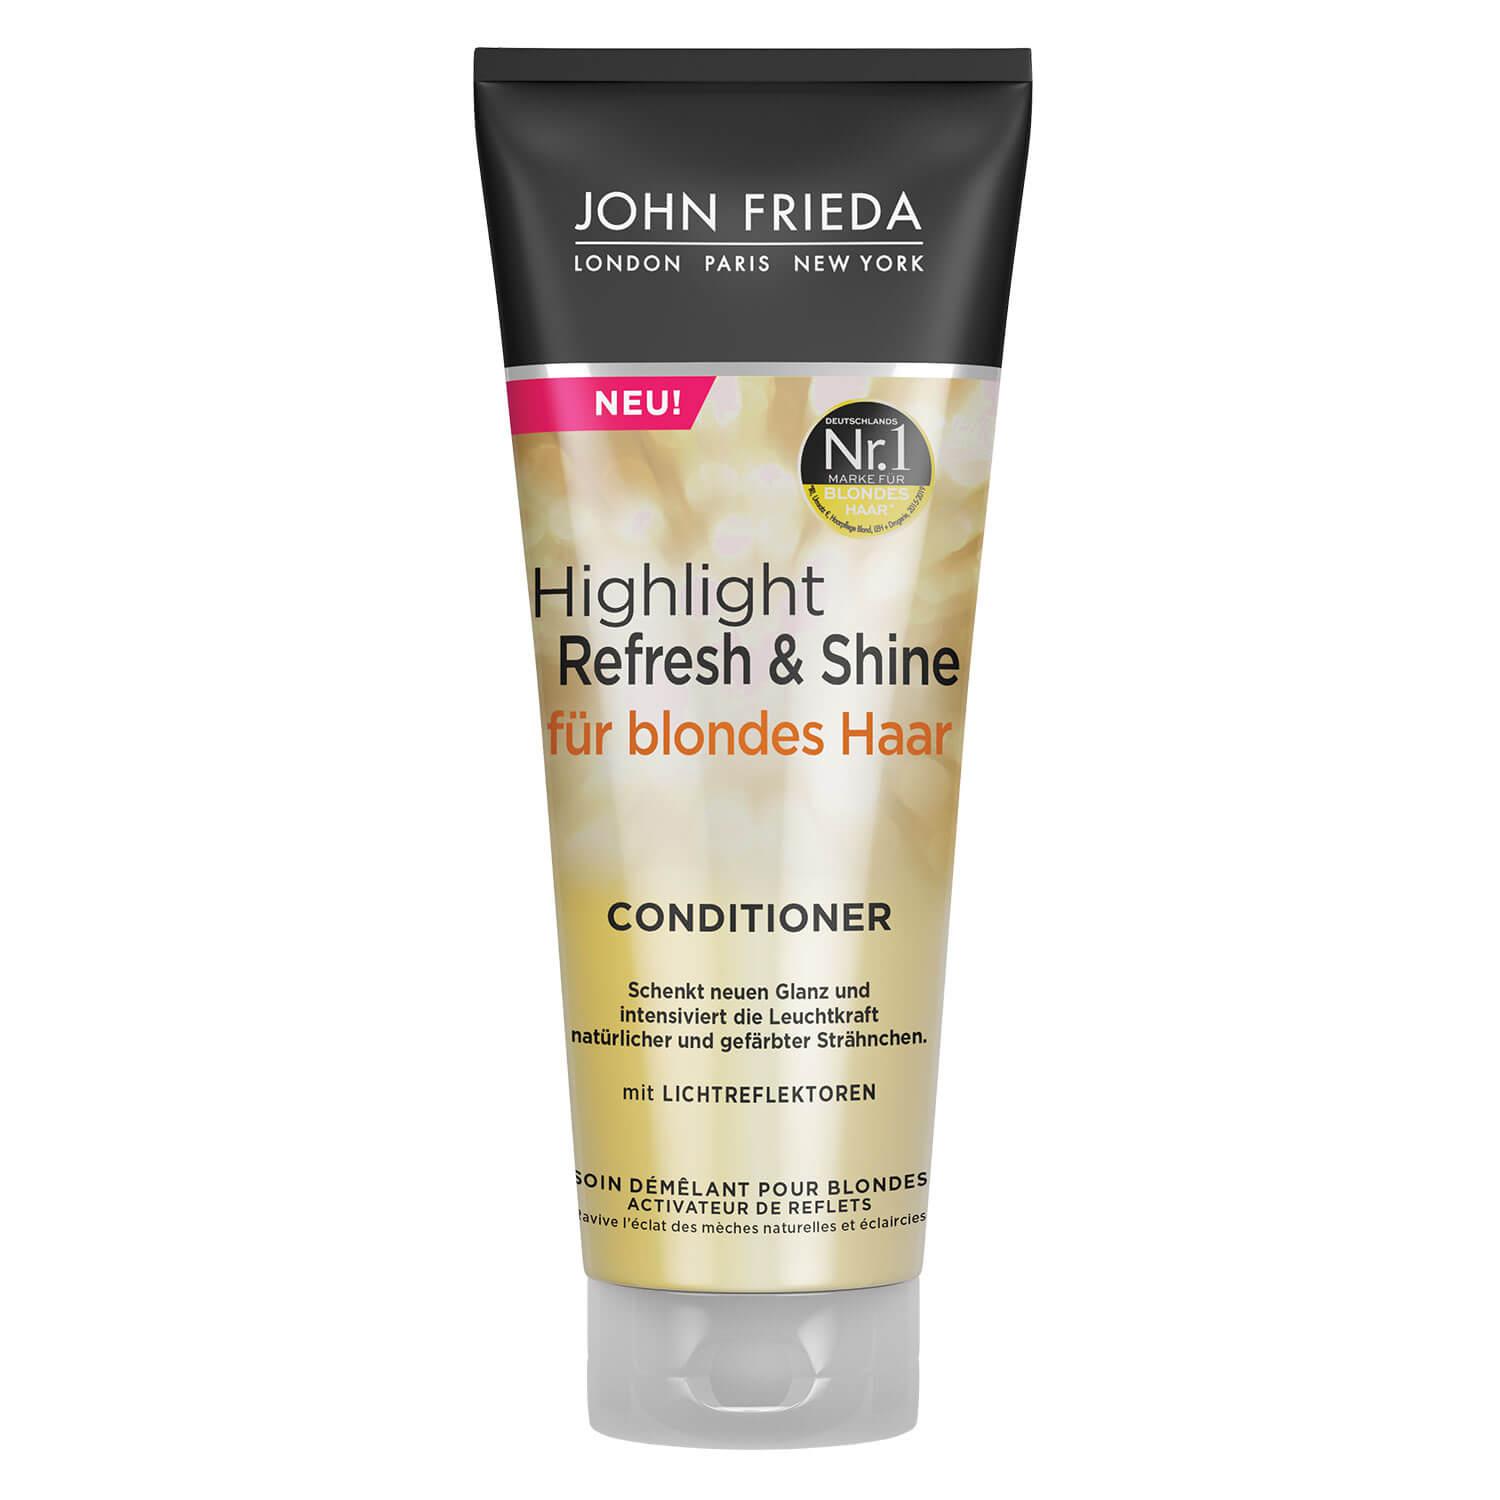 Sheer Blonde - Highlight Refresh & Shine Conditioner